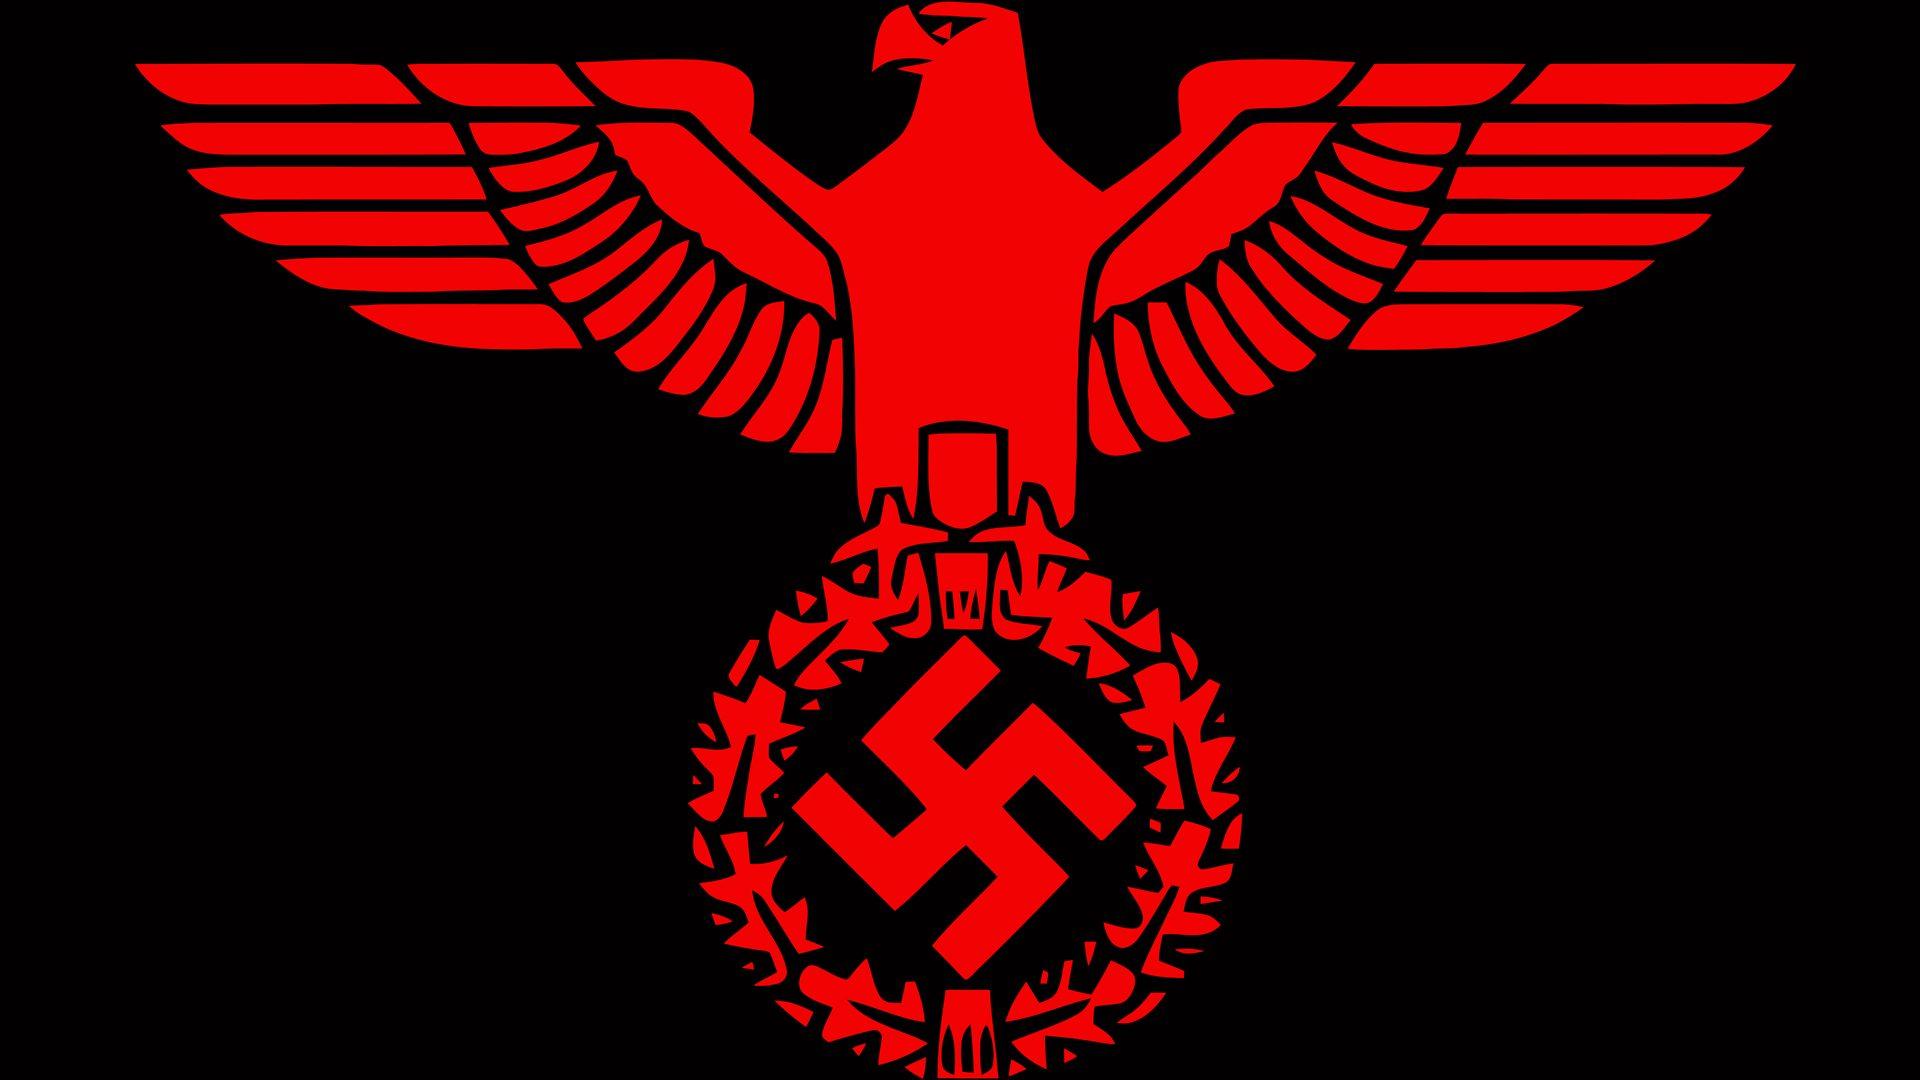 Natsi Logo - Black And Red Wallpaper Of The Nazi Party Emblem / Logo / Symbol ...